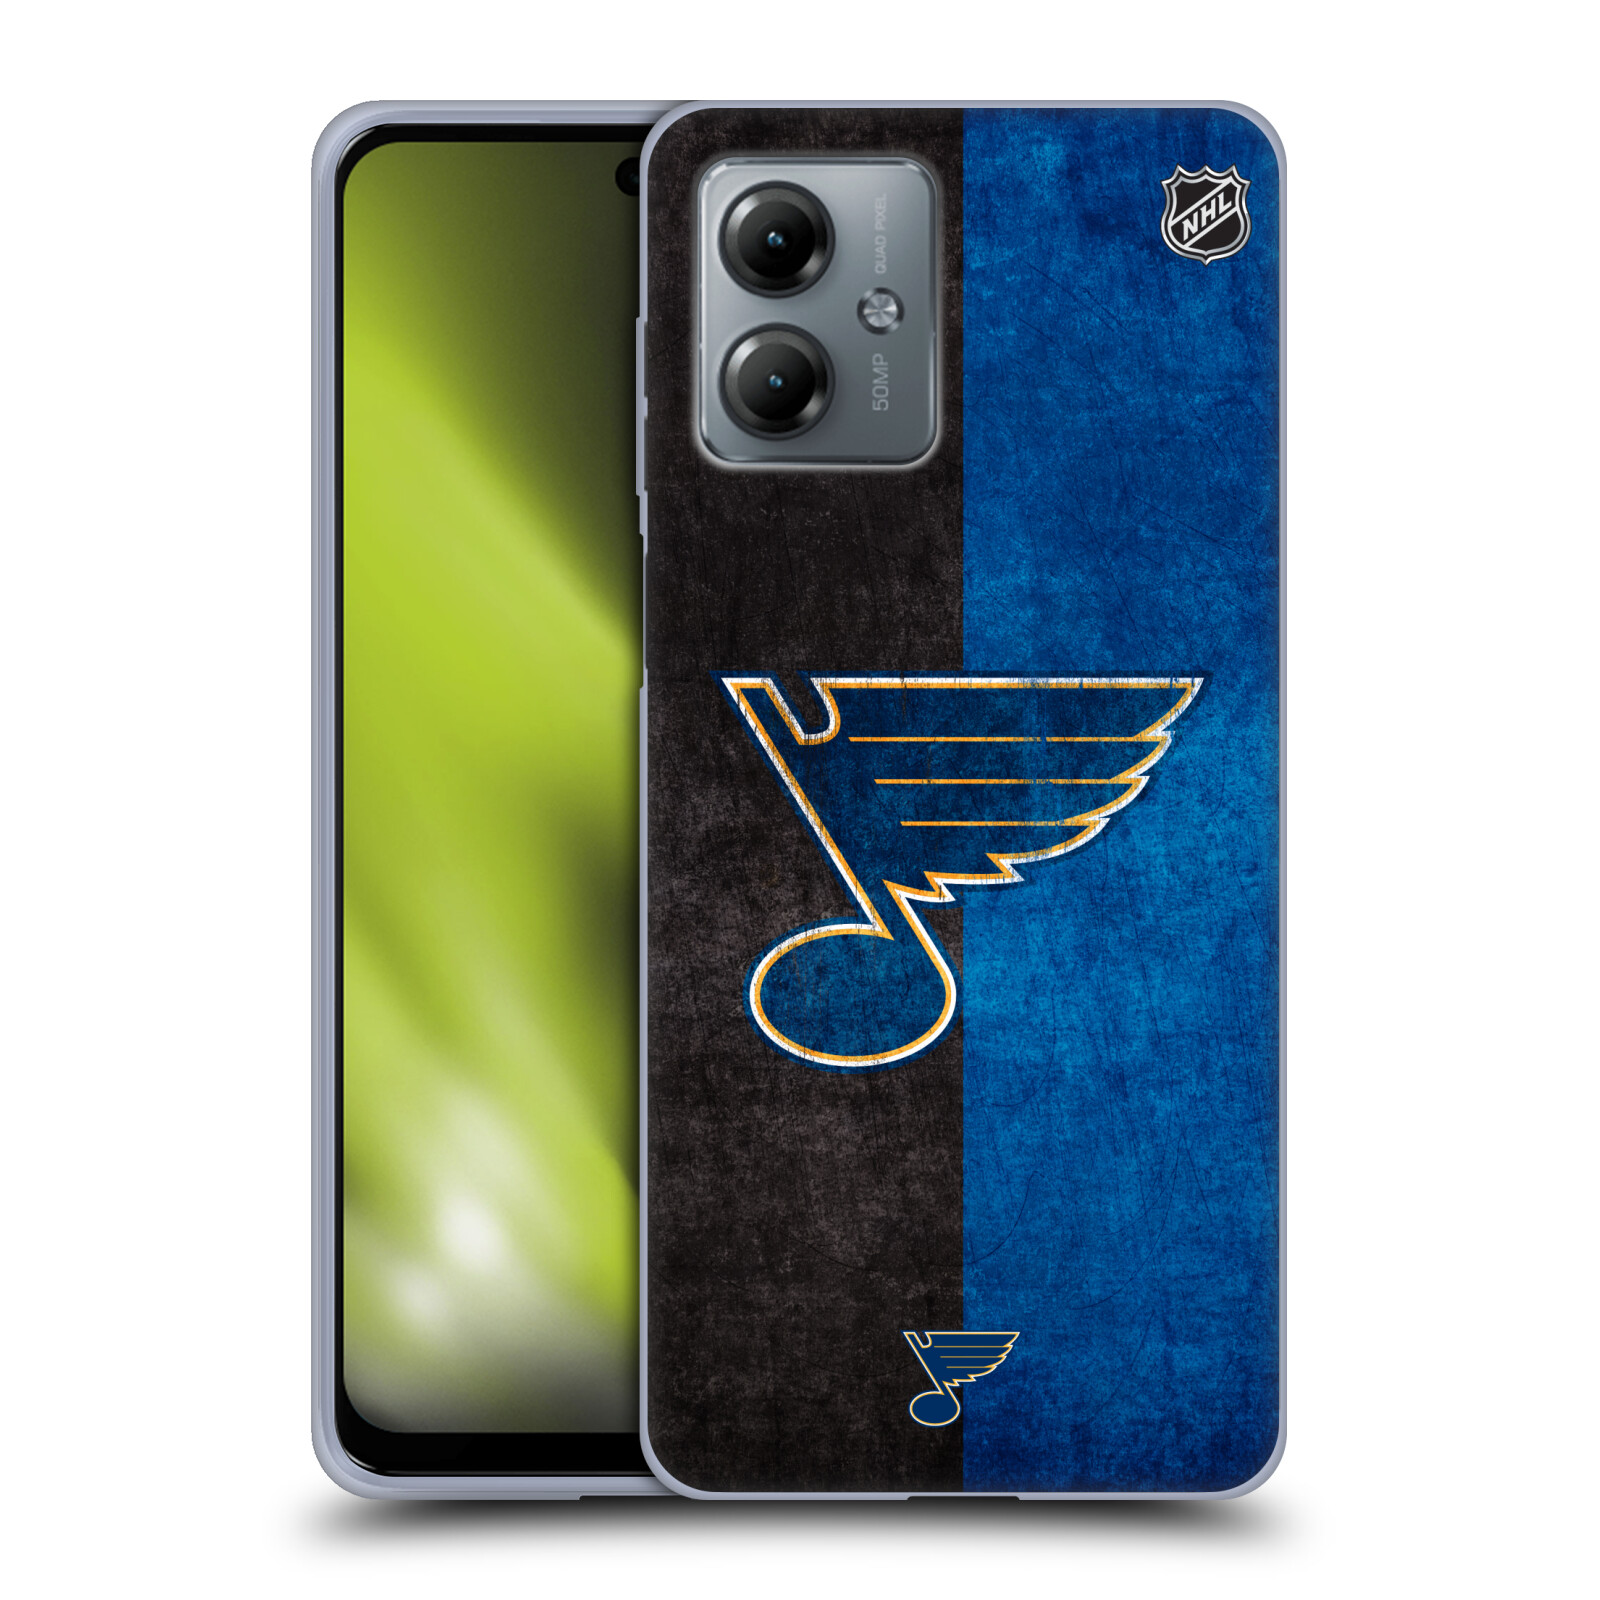 Silikonové pouzdro na mobil Motorola Moto G14 - NHL - Půlené logo St Louis Blues (Silikonový kryt, obal, pouzdro na mobilní telefon Motorola Moto G14 s licencovaným motivem NHL - Půlené logo St Louis Blues)